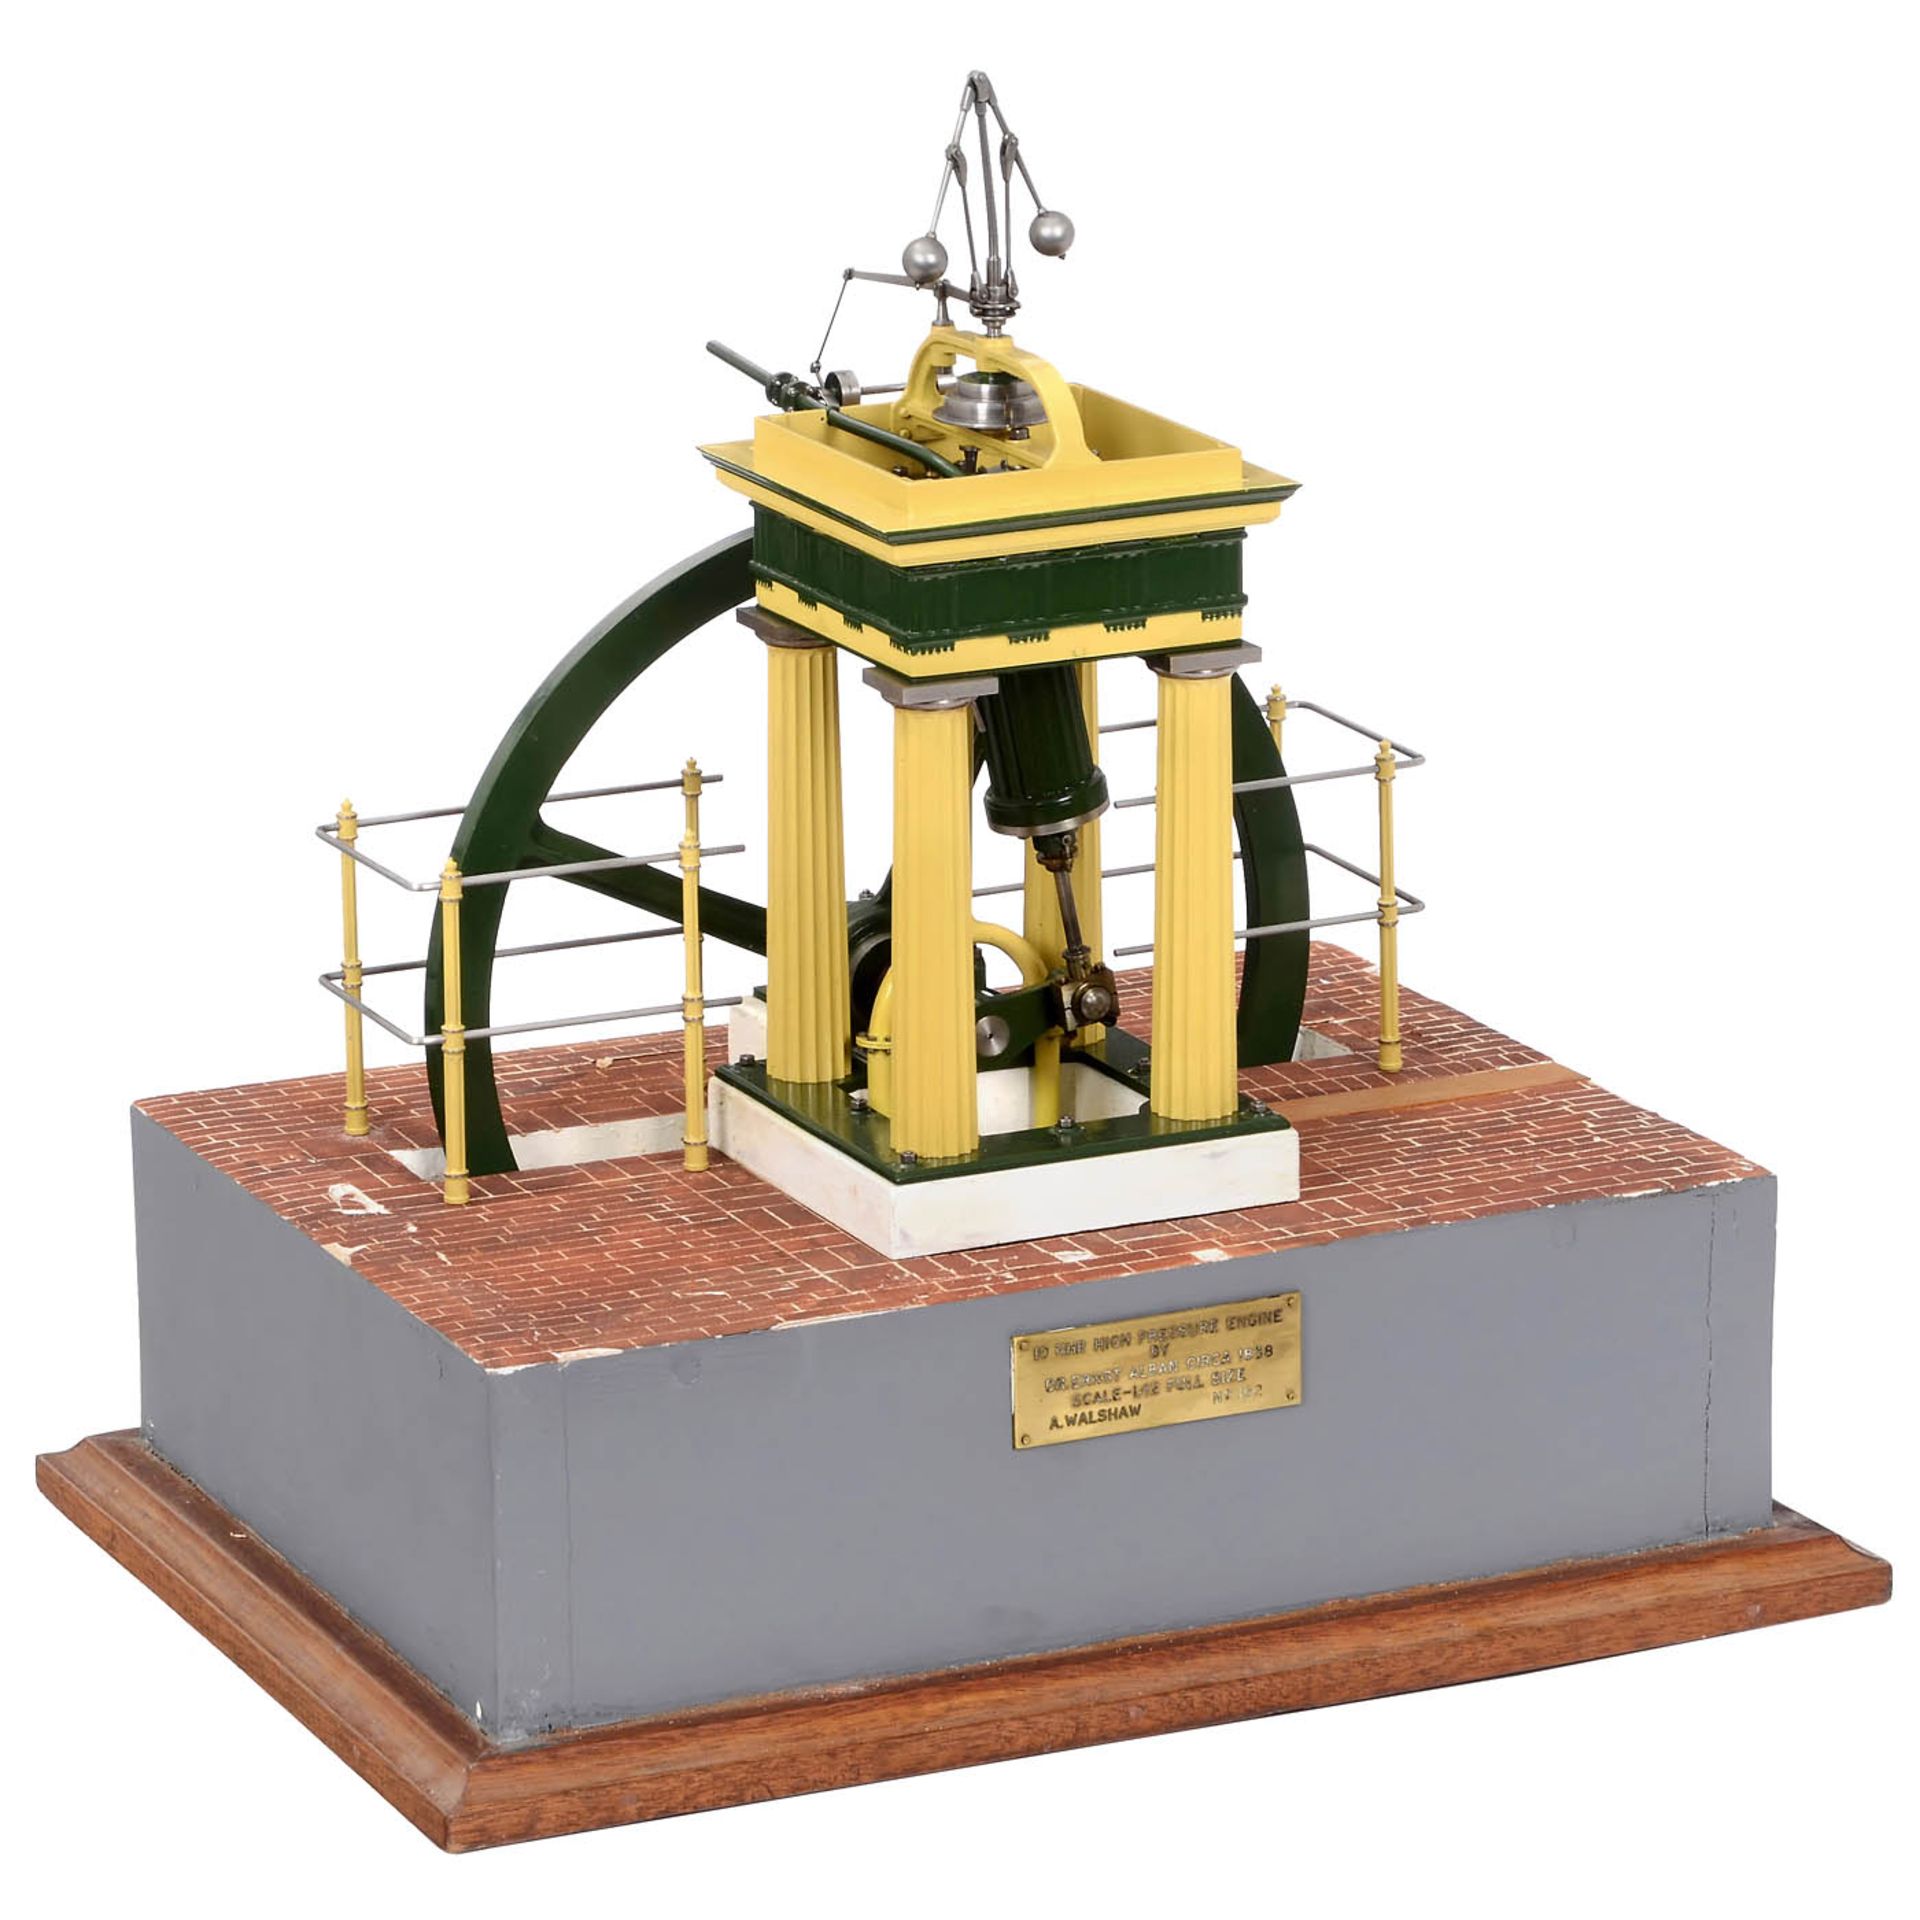 1:12 Scale Model of a High-Pressure Steam Engine Designed by Dr. Ernst Alban - Bild 2 aus 3